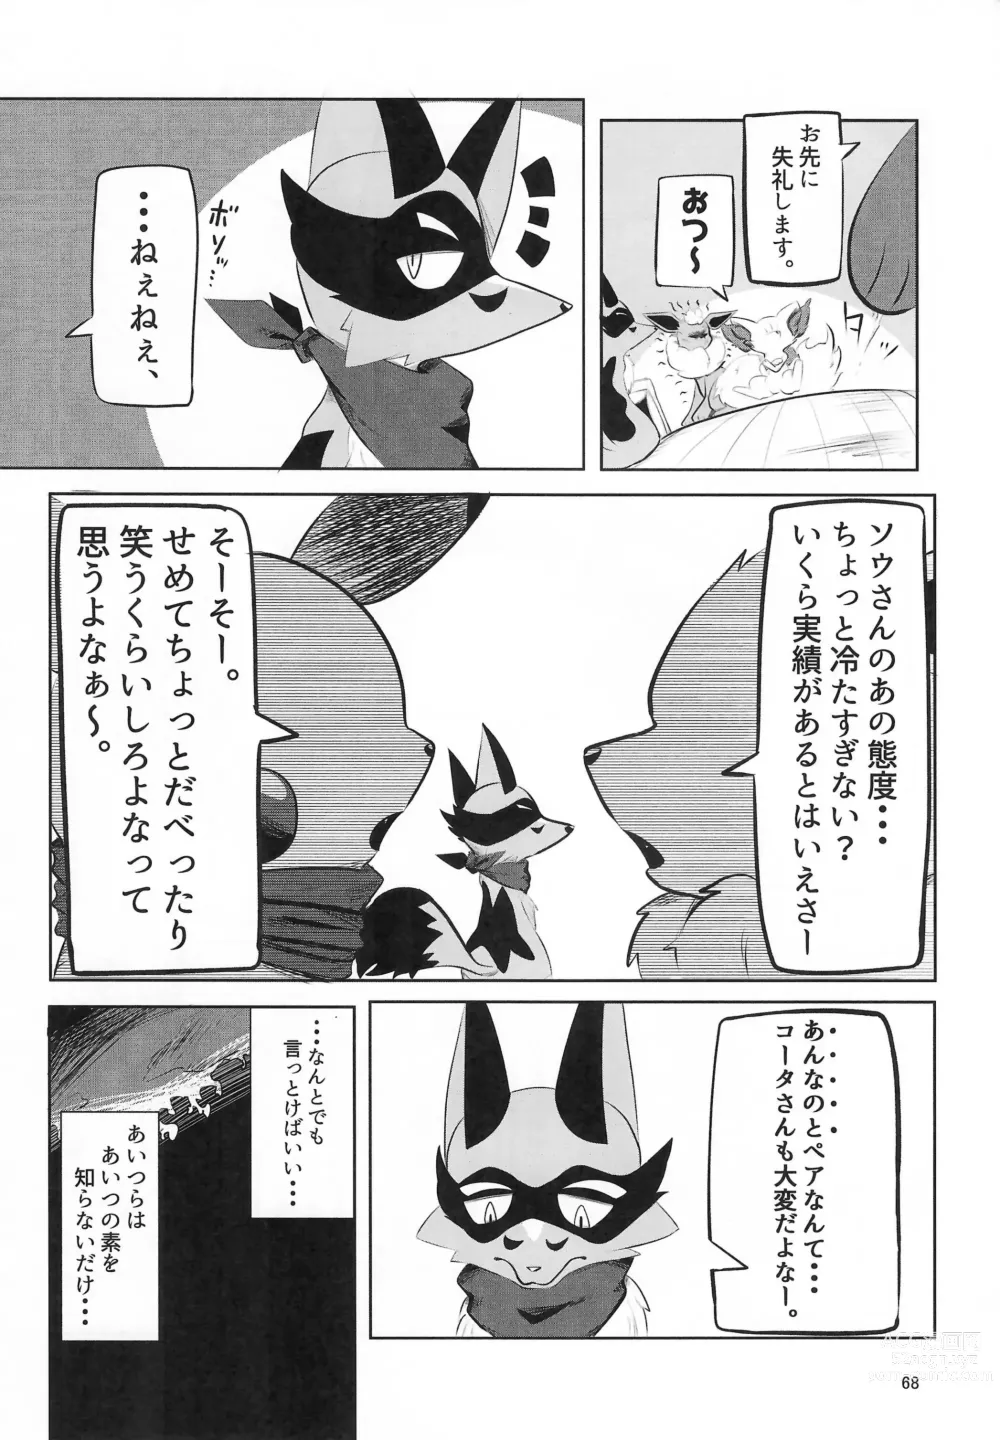 Page 68 of doujinshi Yotsu Ashi BL Anthology K9S